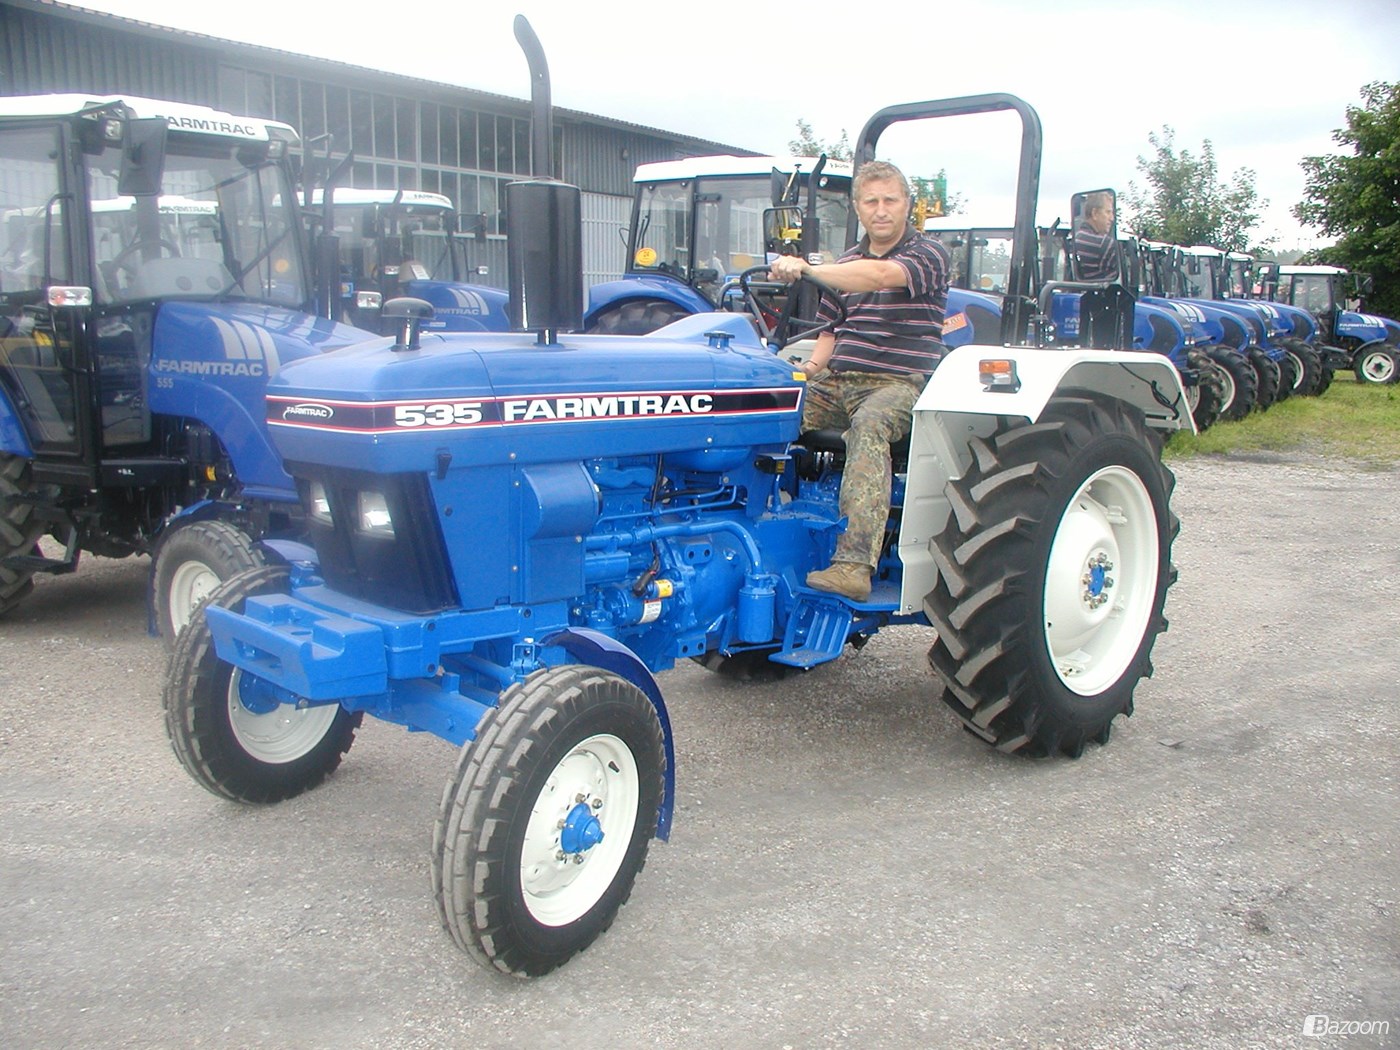 Farmtrac 535 Classic 2013 - Pictures